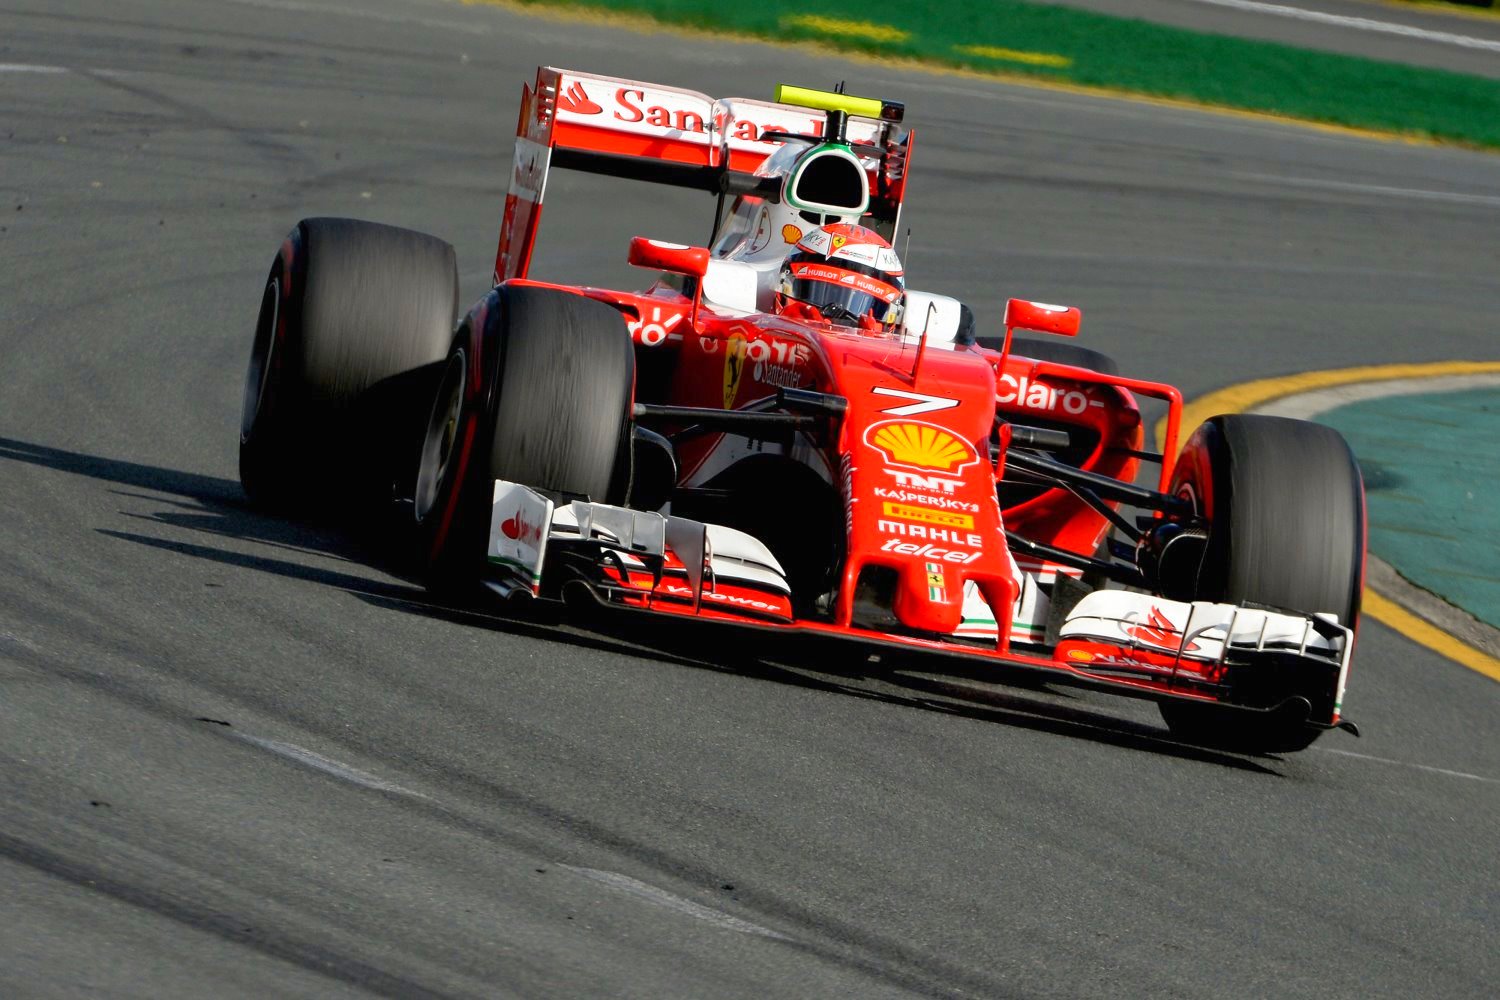 Ferrari cannot beat the superior Mercedes juggernaut